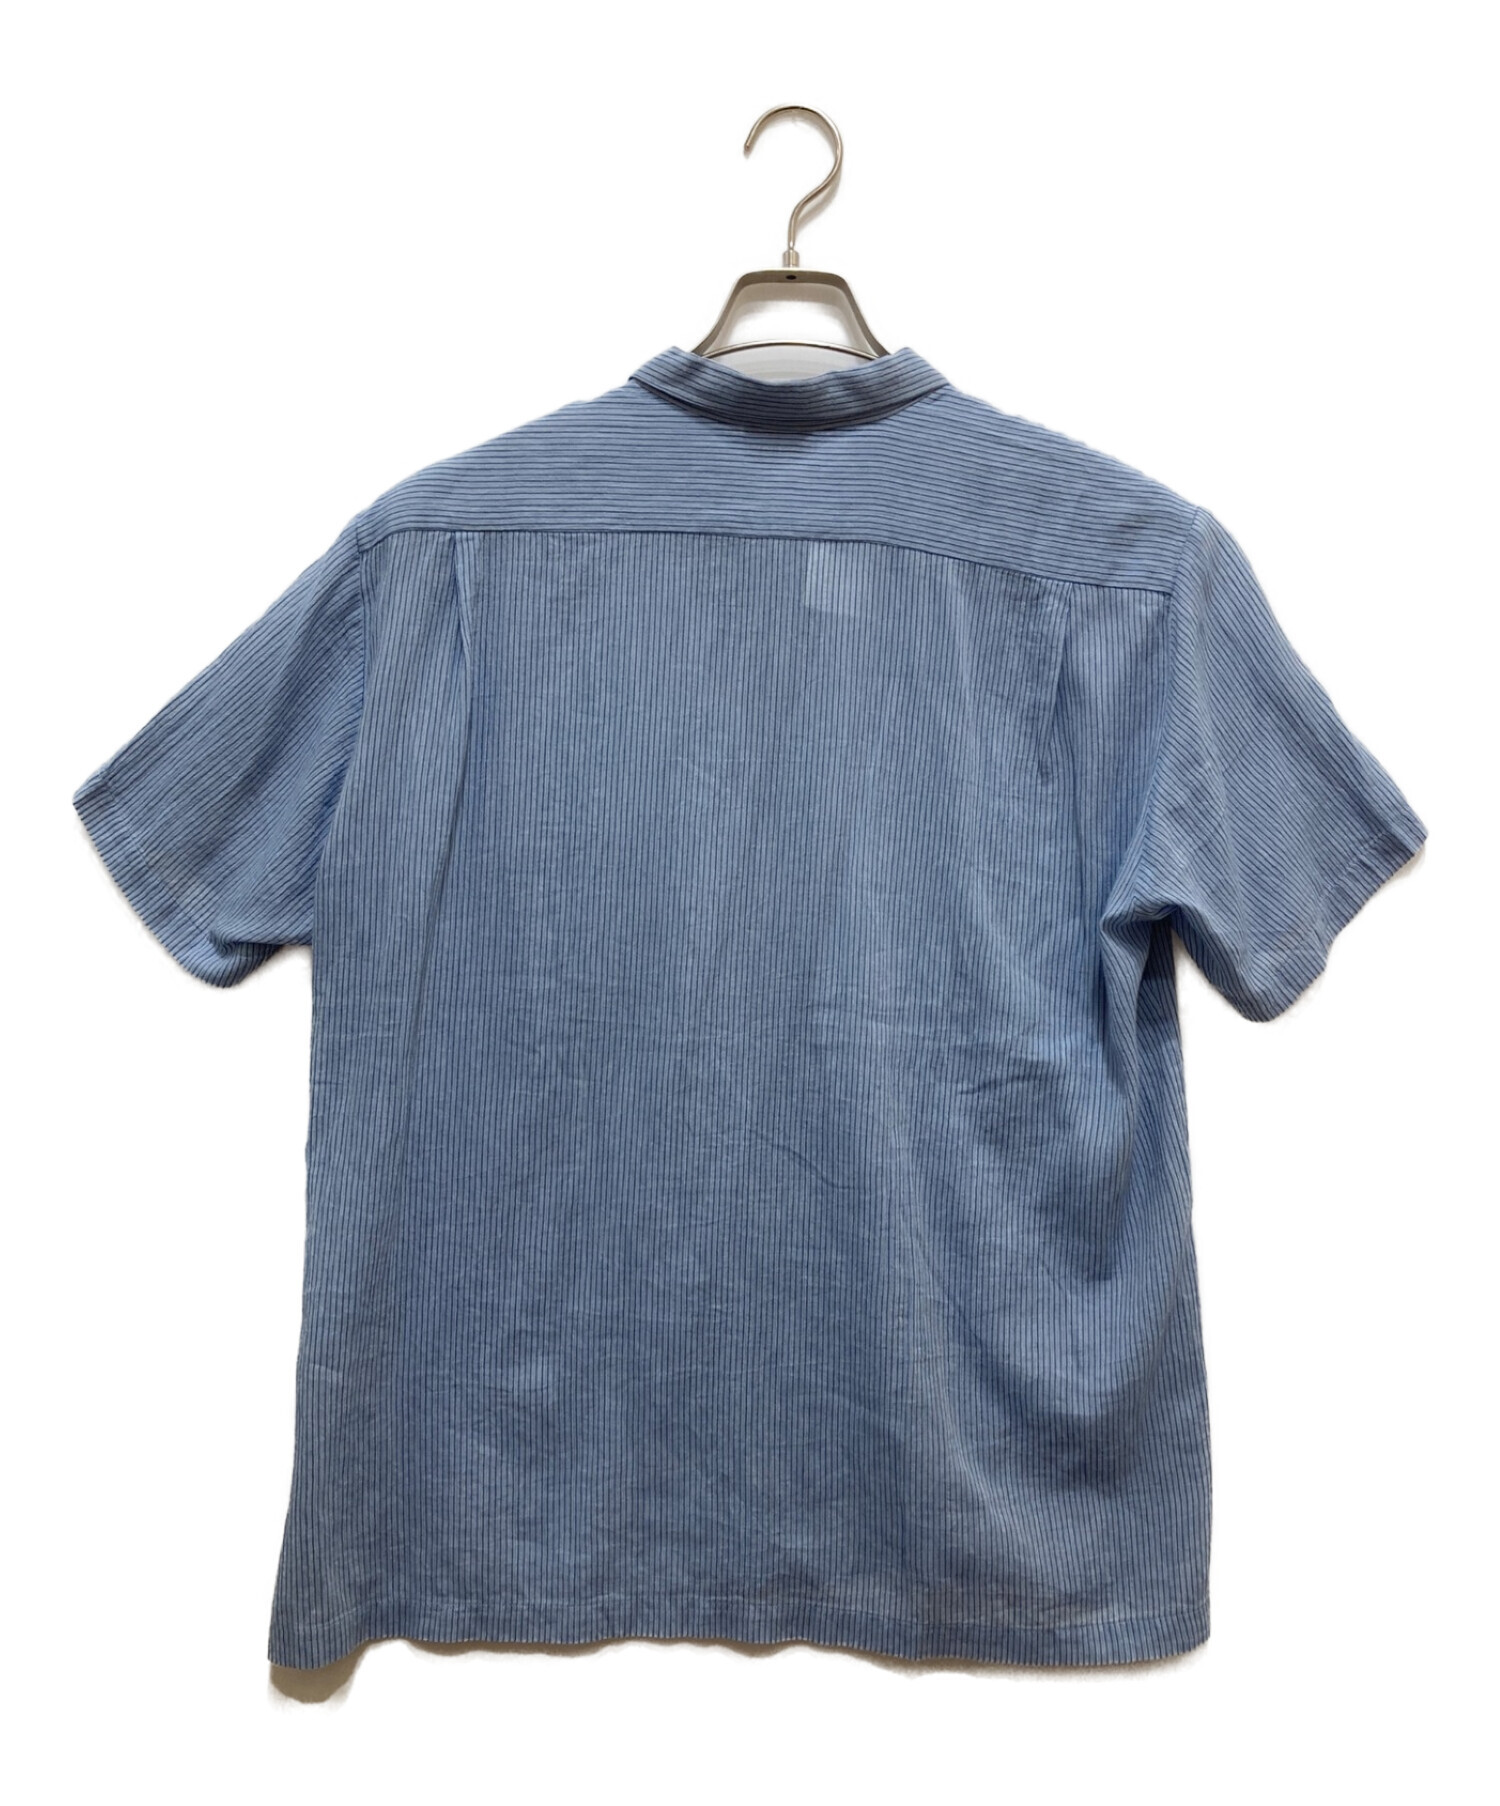 ARTS&SCIENCE (アーツアンドサイエンス) コットンストライプ半袖シャツ ブルー サイズ:3